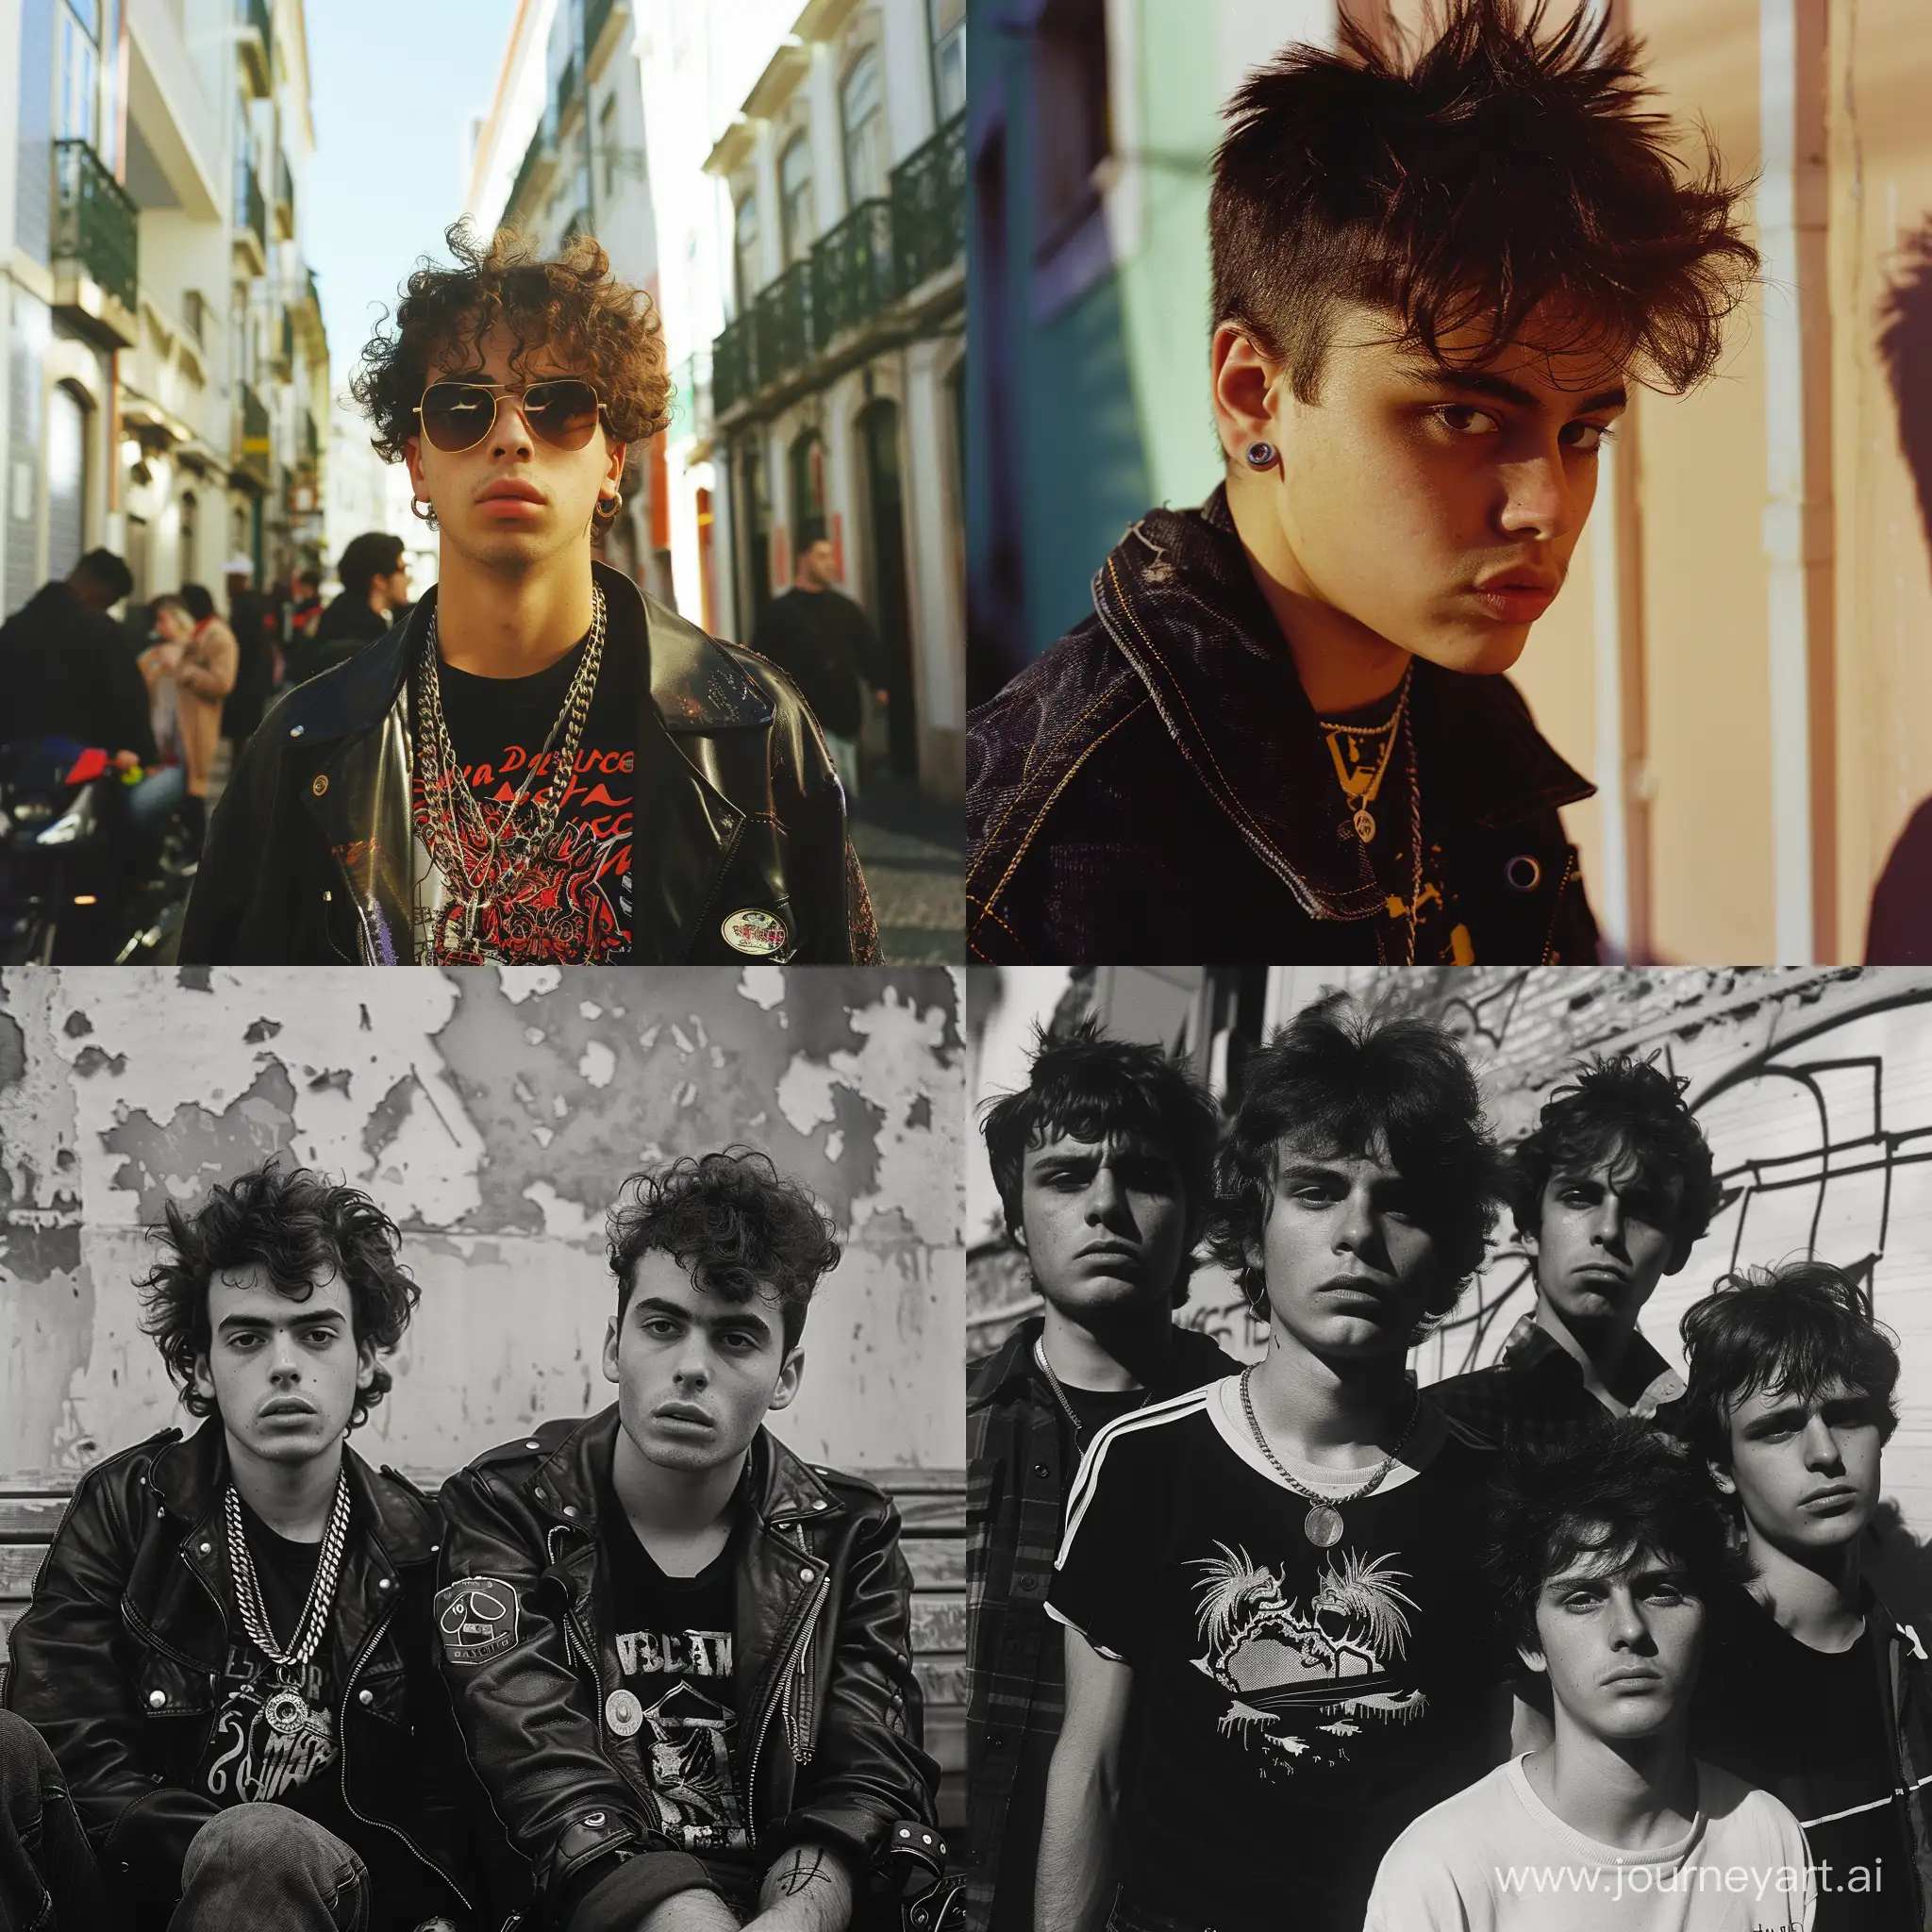 Vibrant-Portuguese-Punk-Youth-in-Urban-Setting